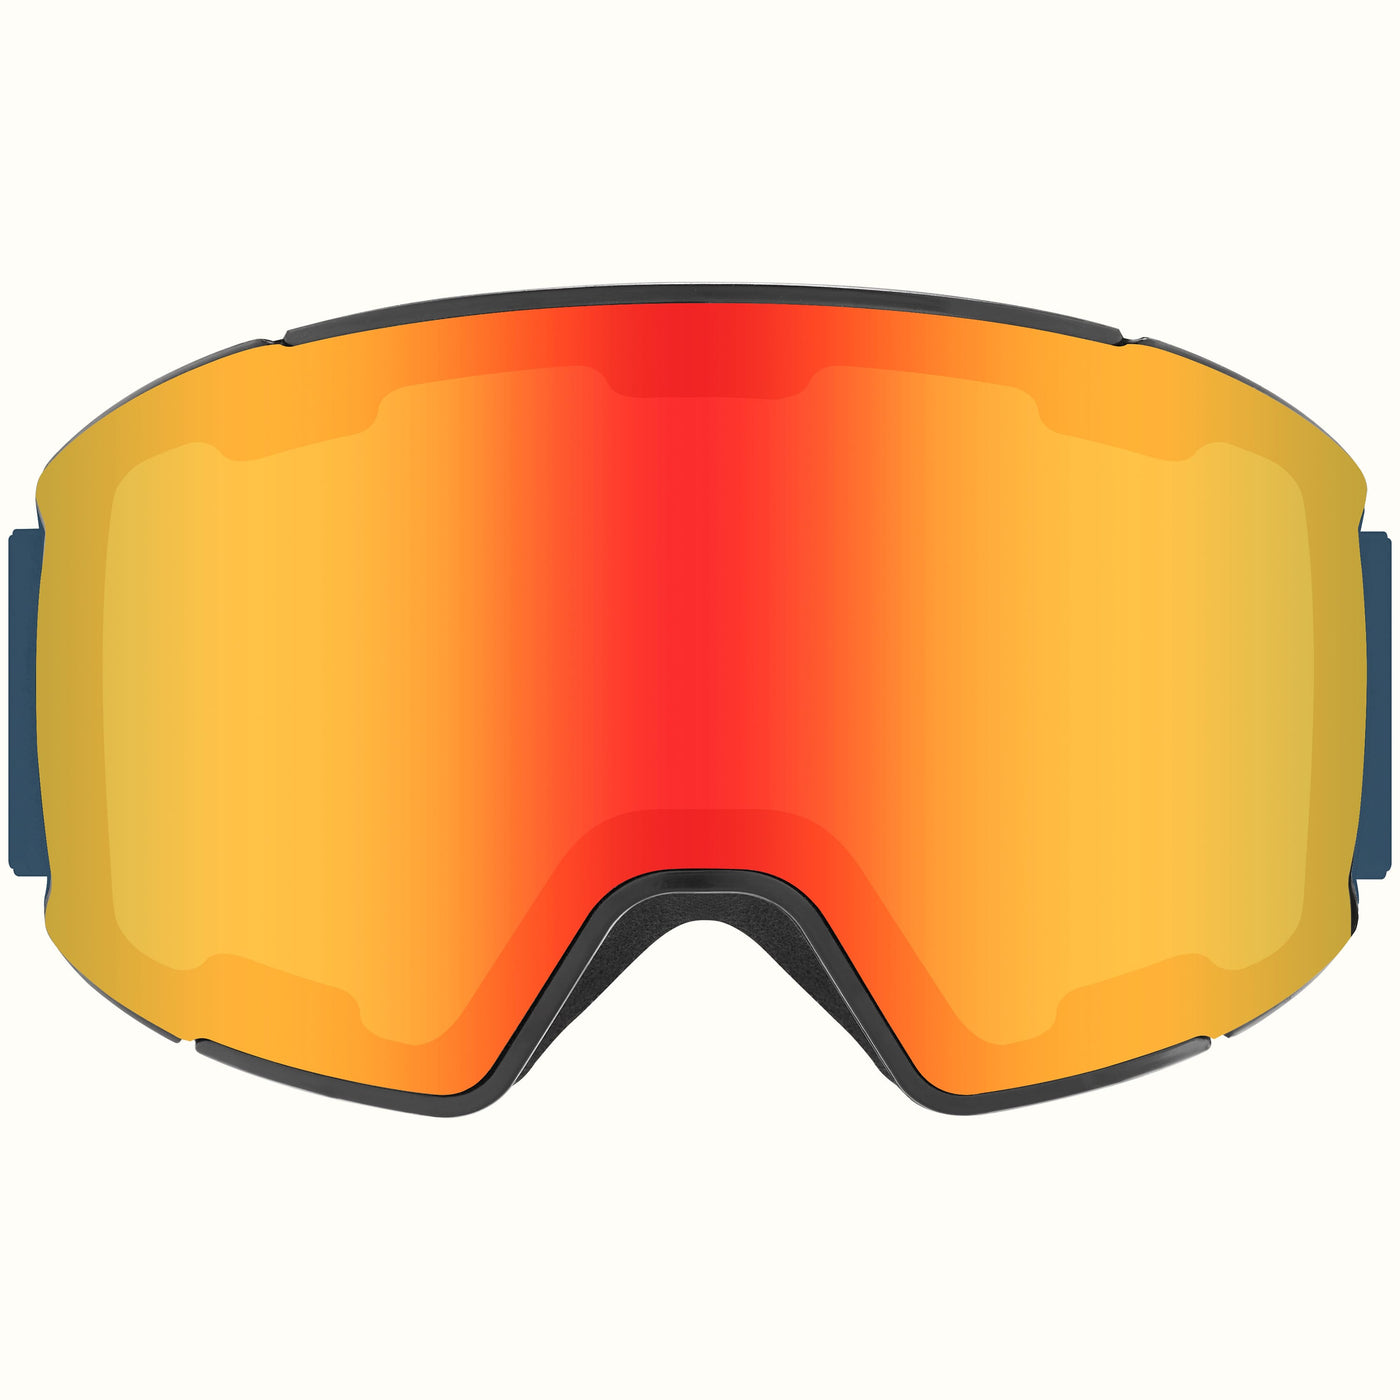 Zenith Adult Ski & Snowboard Goggles | Retrospec